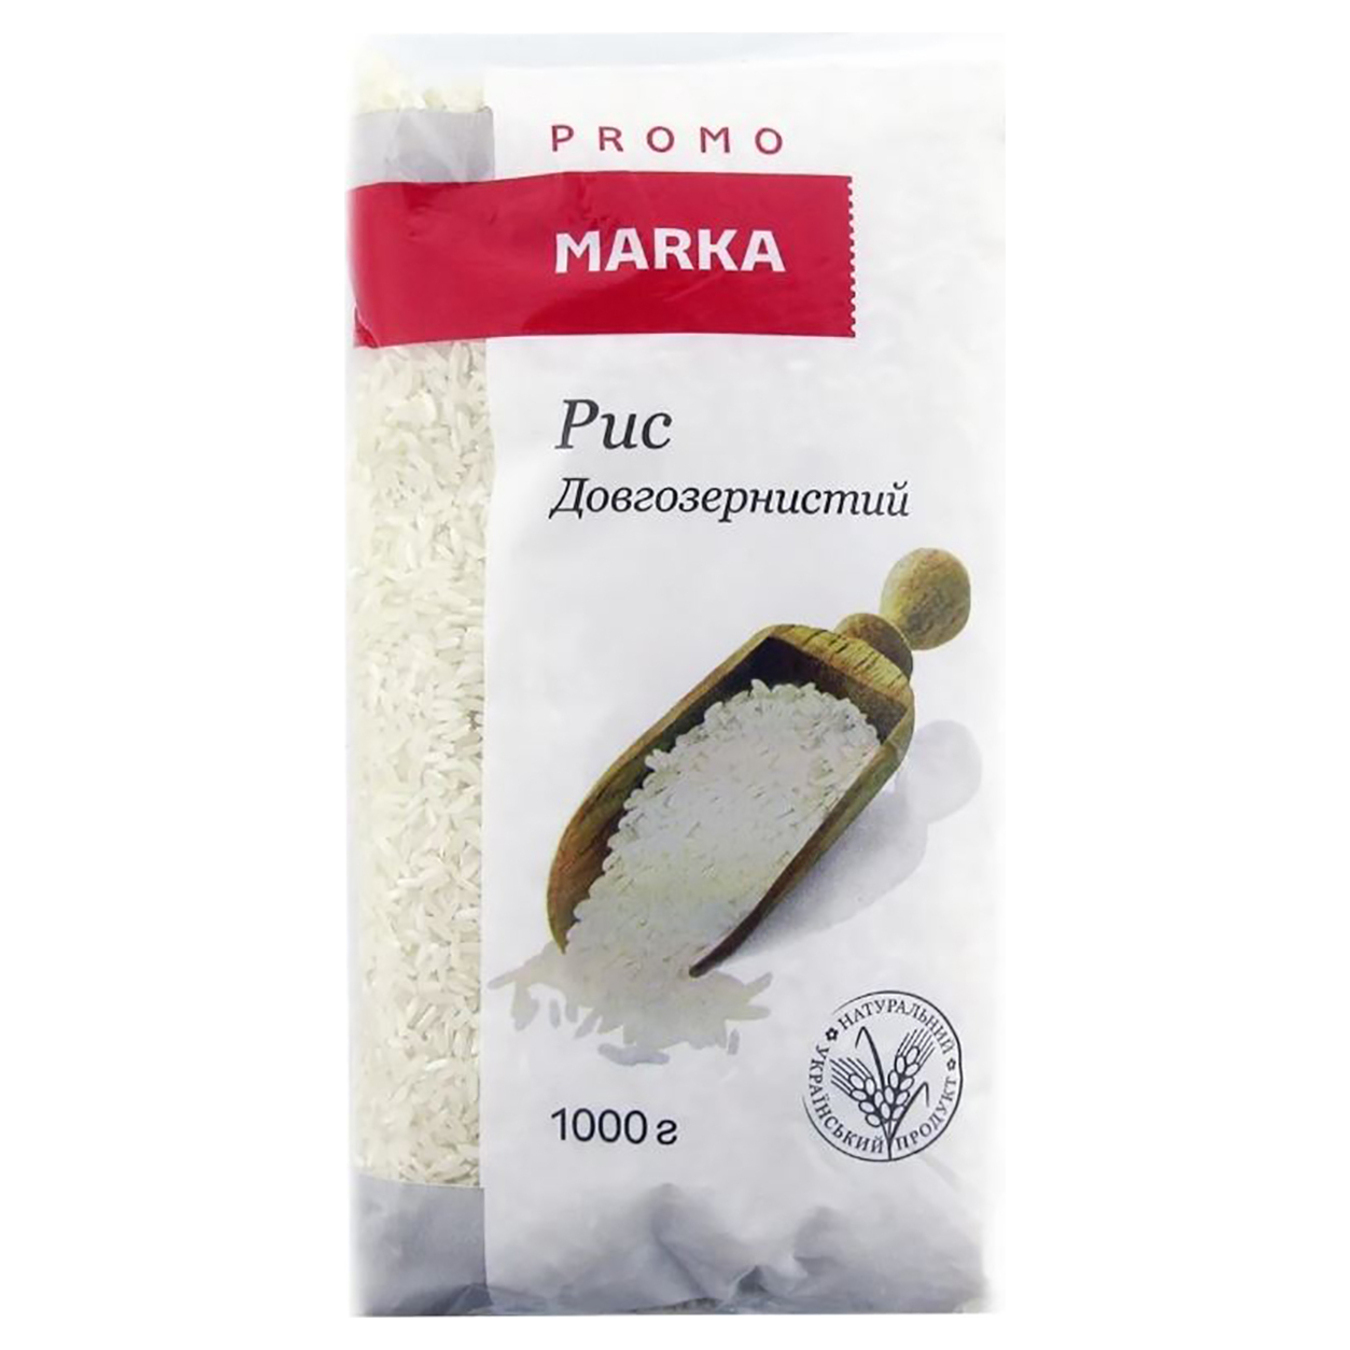 Marka Promo Long grain rice 1kg